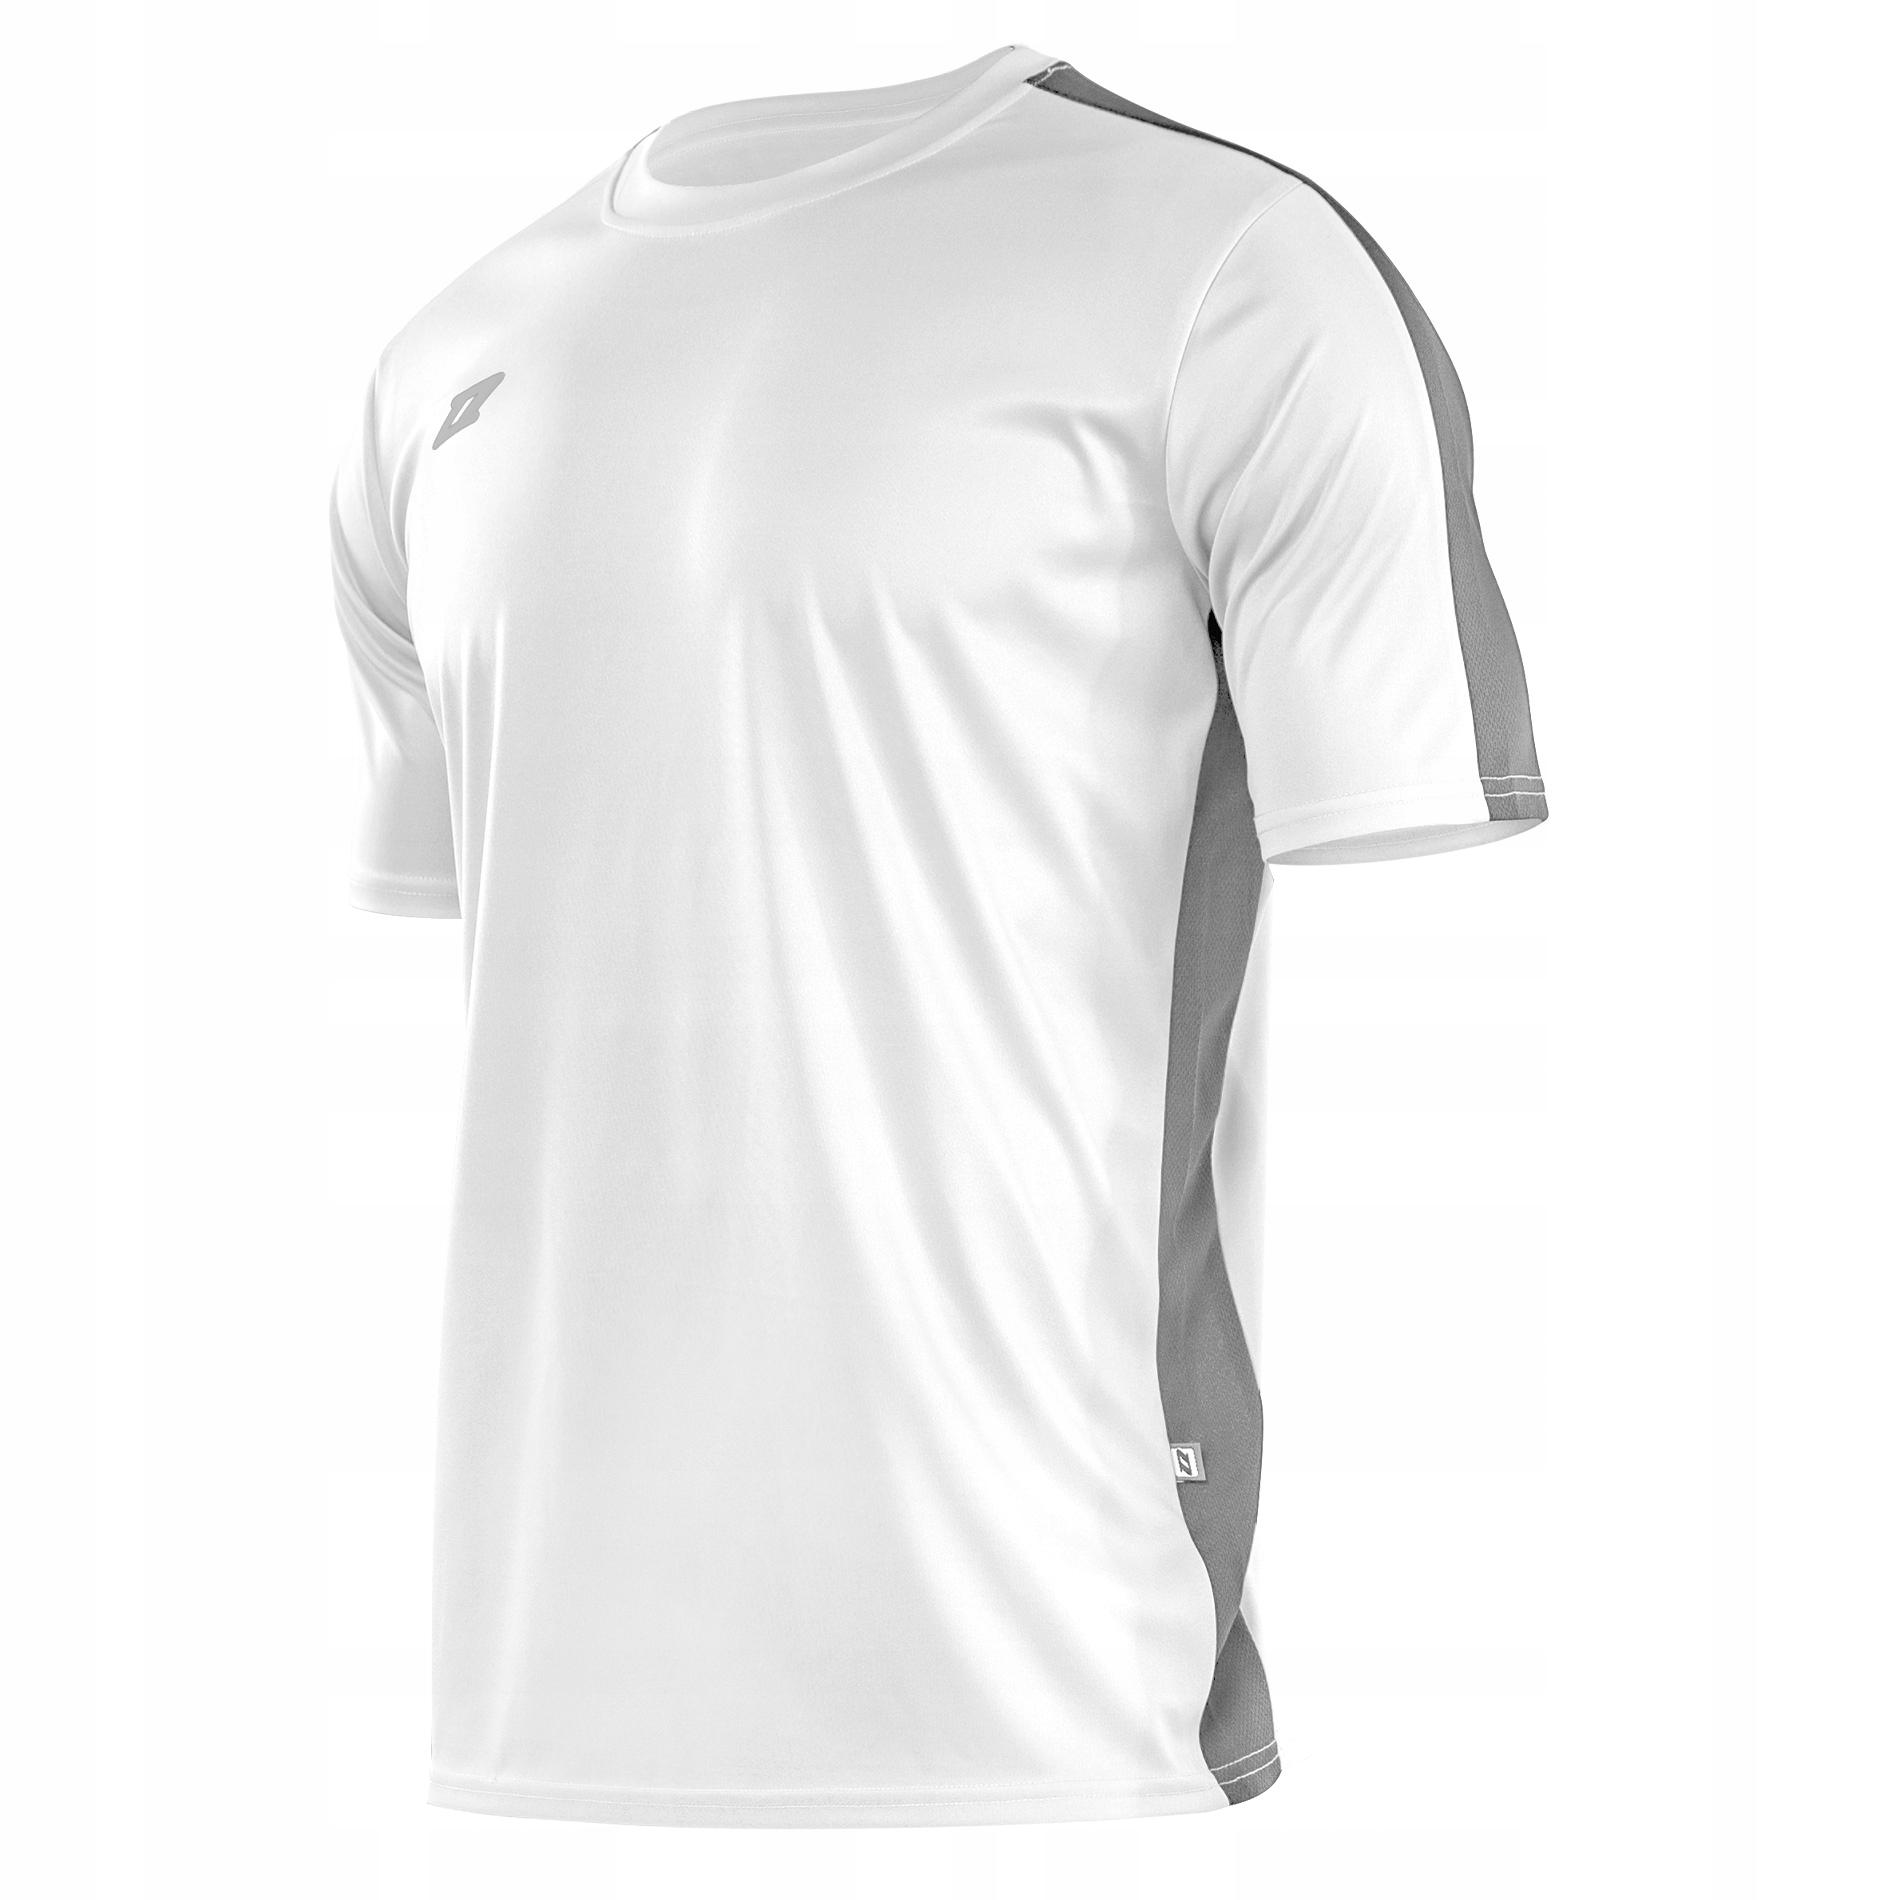 Koszulka piłkarska ZINA ILUVIO SR biała #XXL